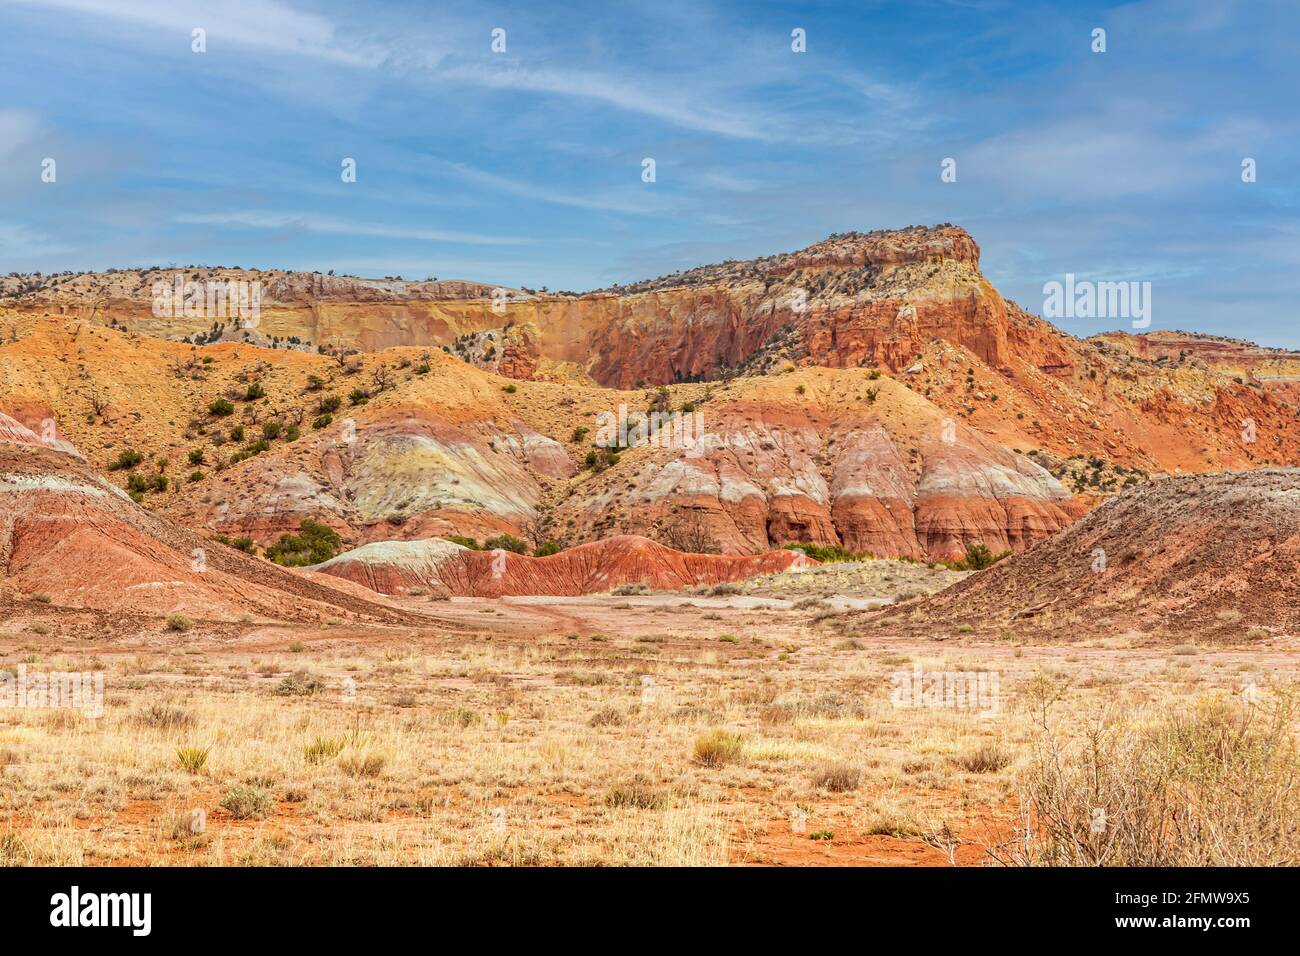 Colourful, striated sandstone rocks at Abiquiu, New Mexico., USA. Stock Photo